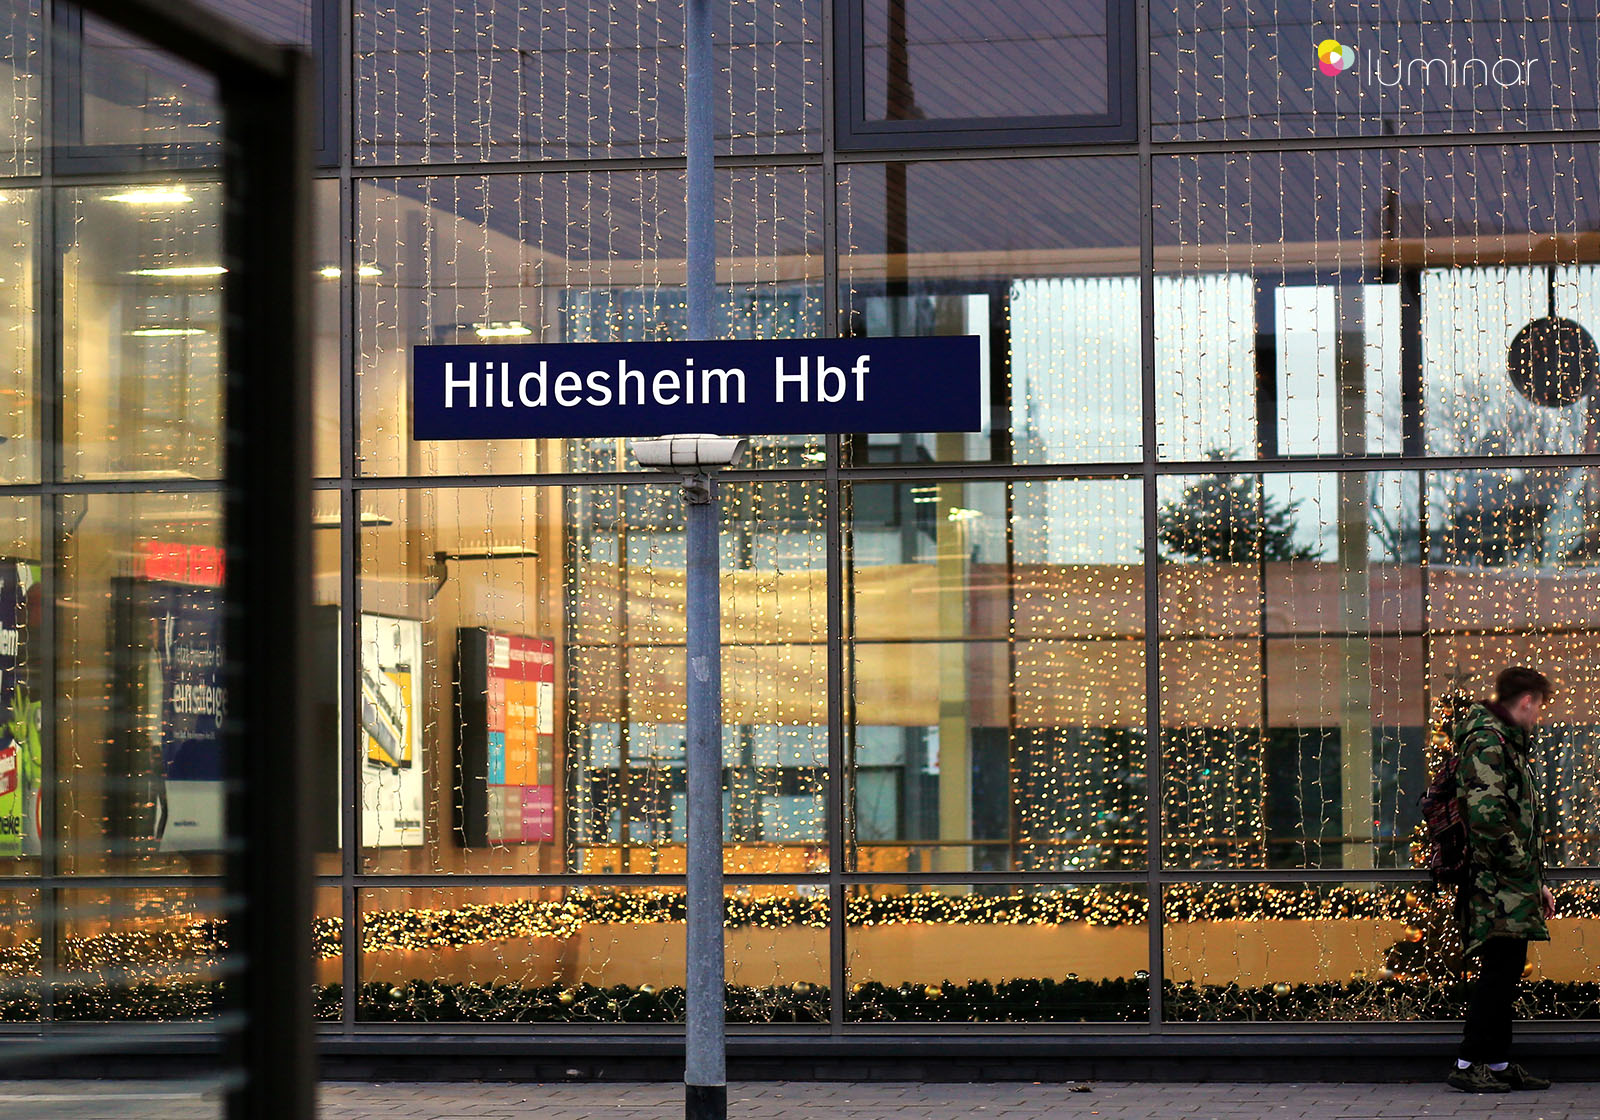 Ref Web luminar Hbf. Hildesheim 02